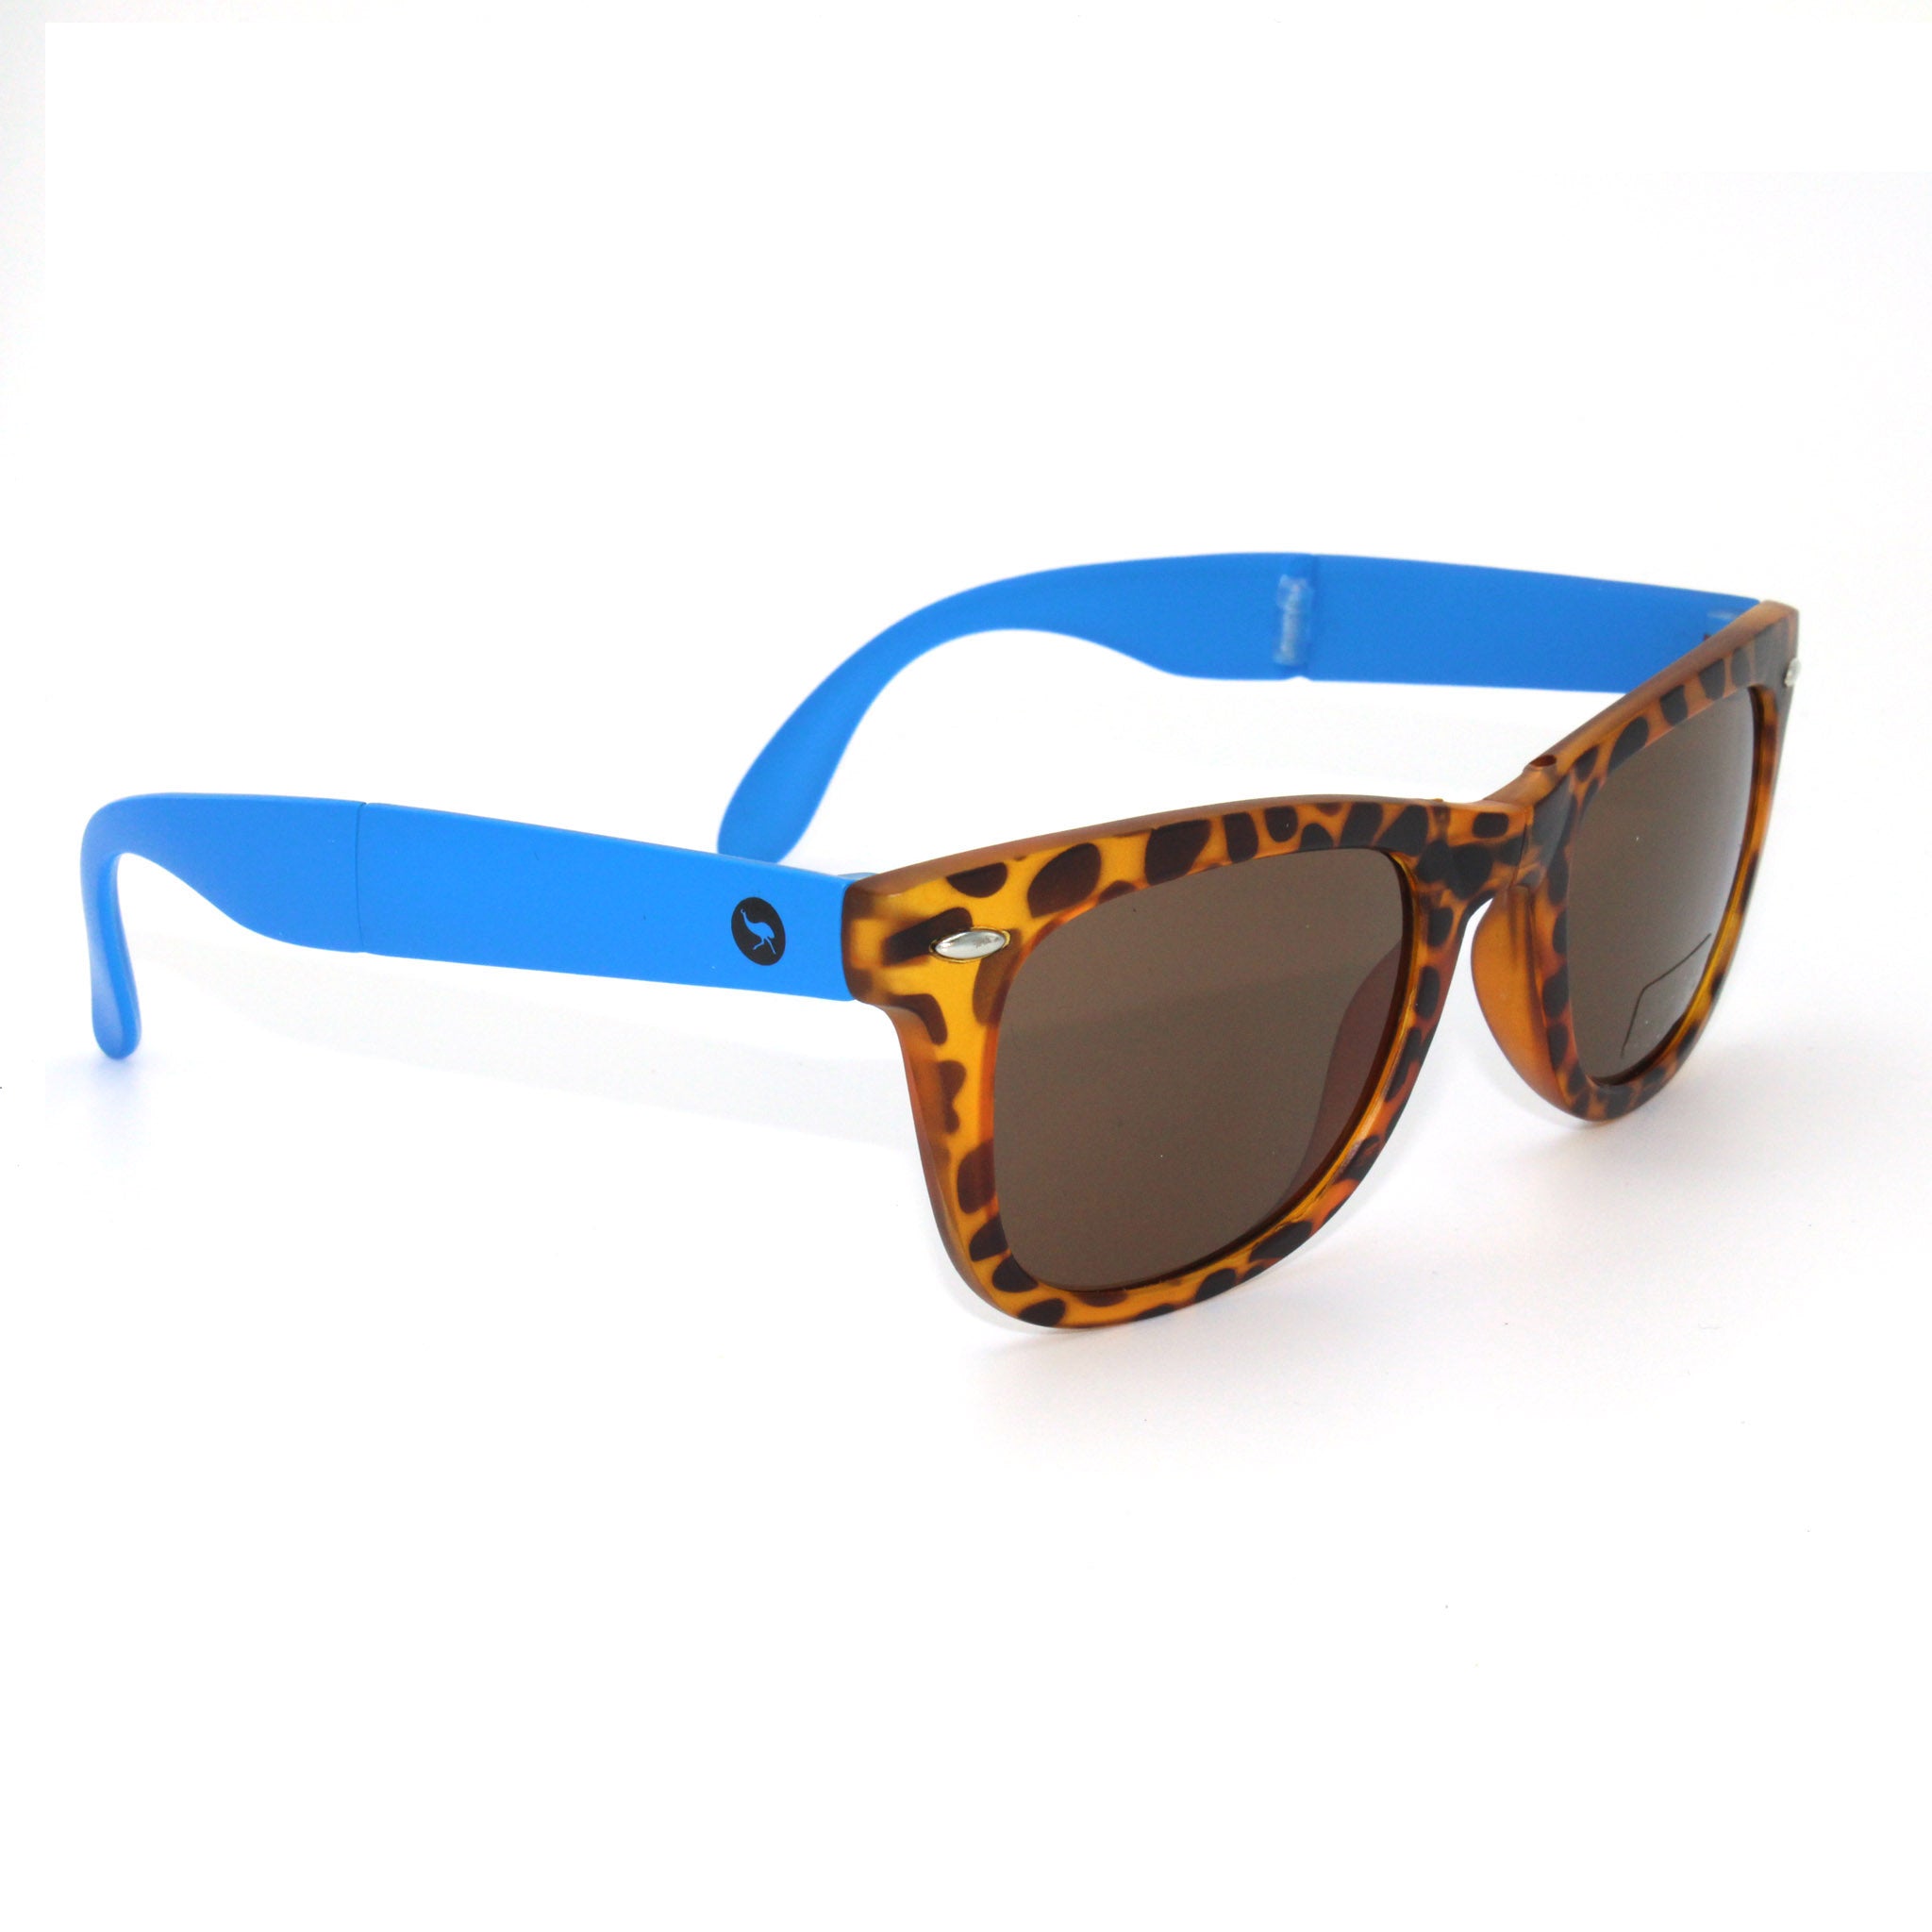 Sunglasses - Turquoise